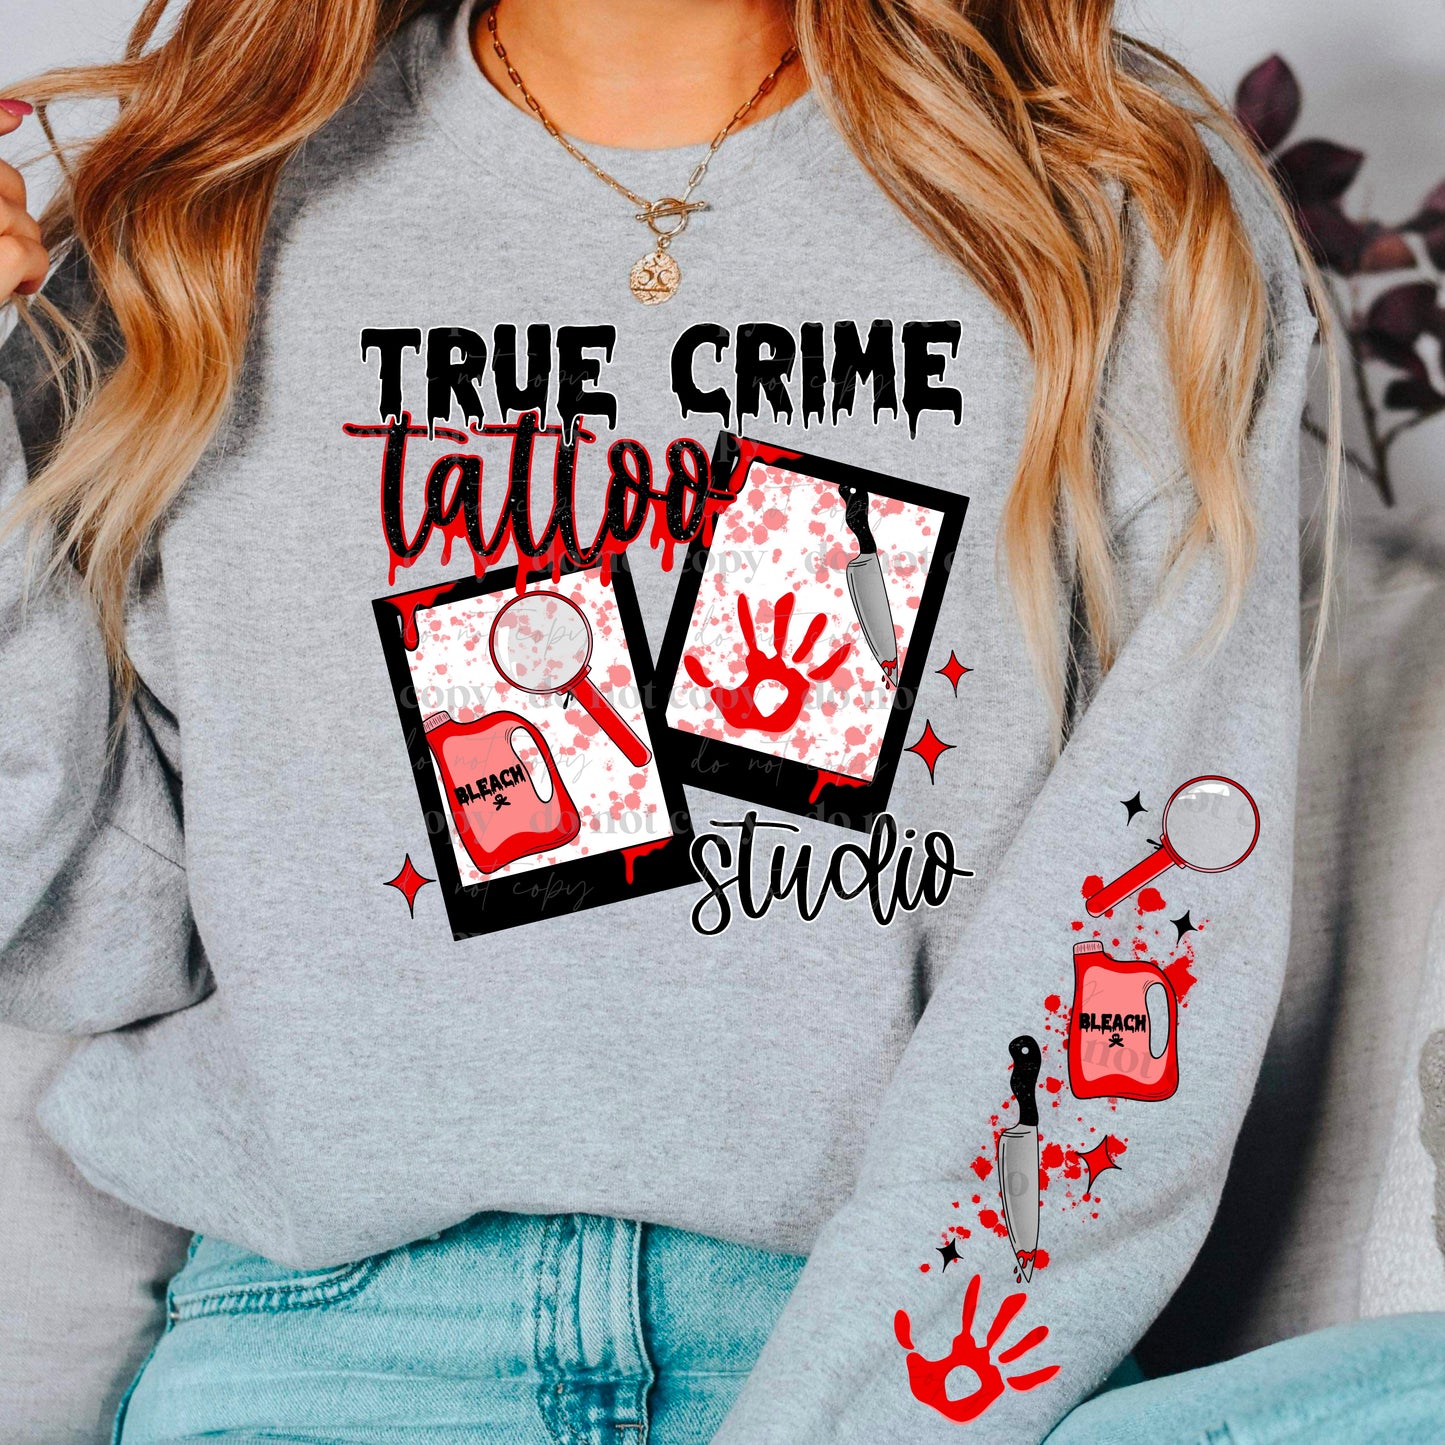 True Crime Tattoo Studio with sleeve